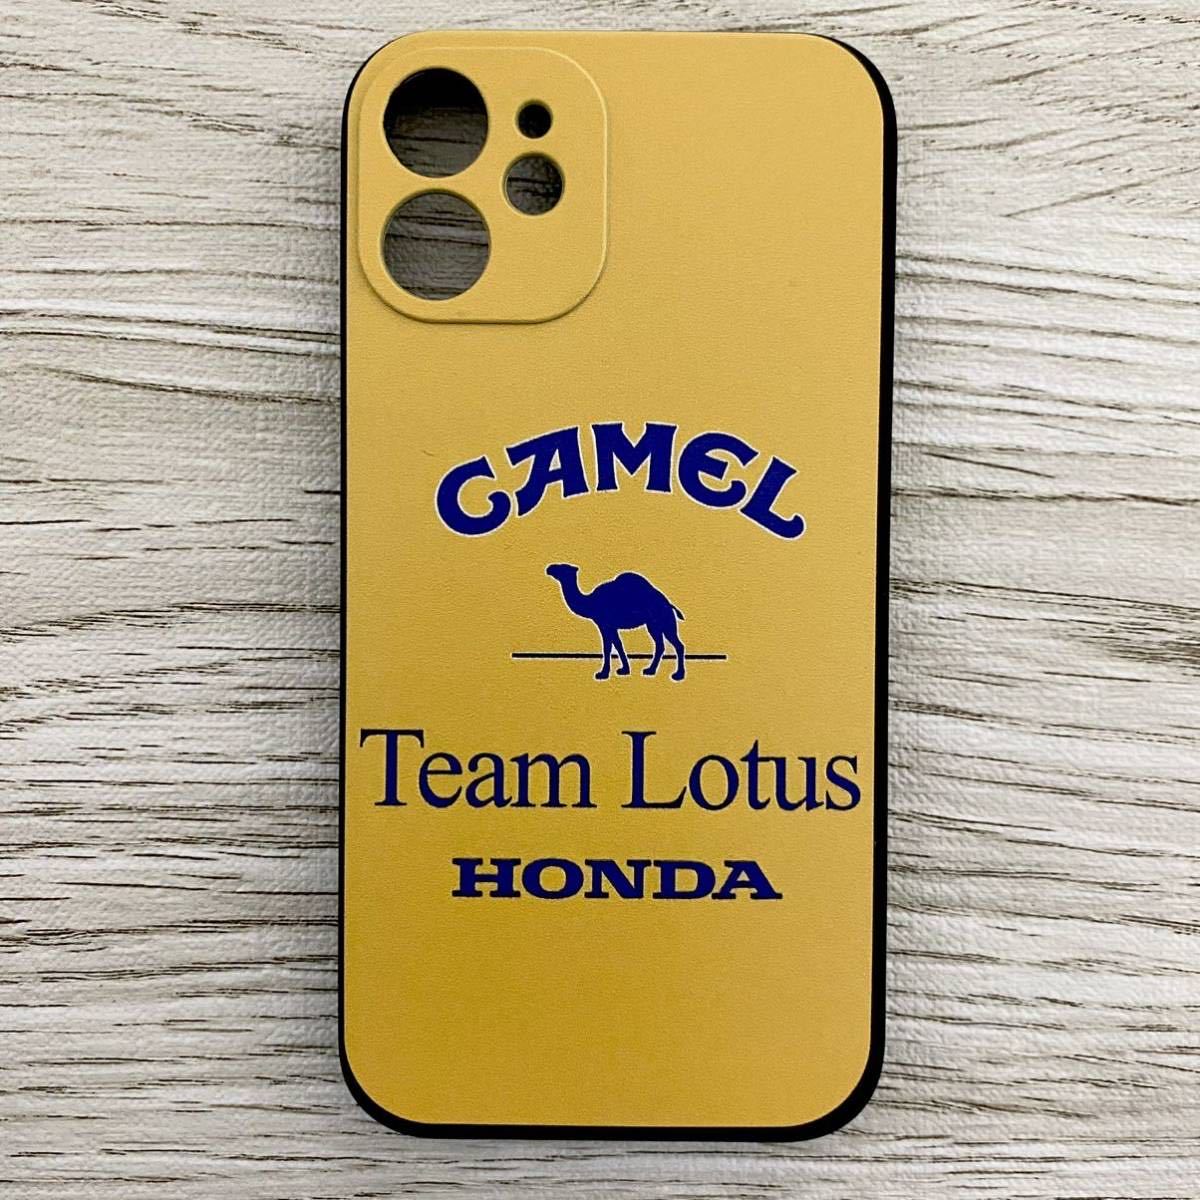  Camel Lotus Honda iPhone 12 mini case F1 i-ll ton * Senna smartphone 